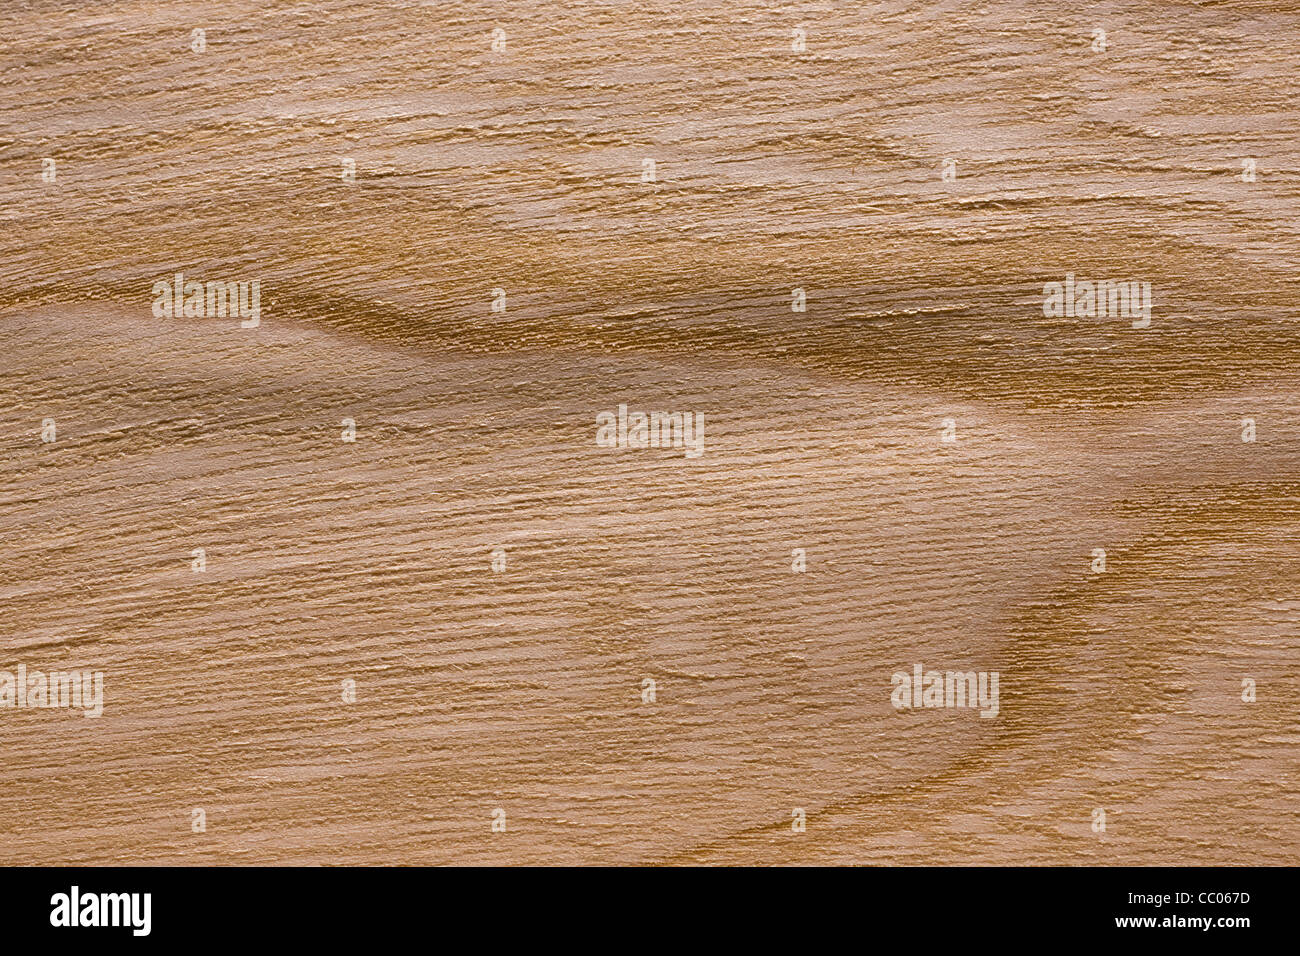 Wood grain of elm (Ulmus), Europe Stock Photo